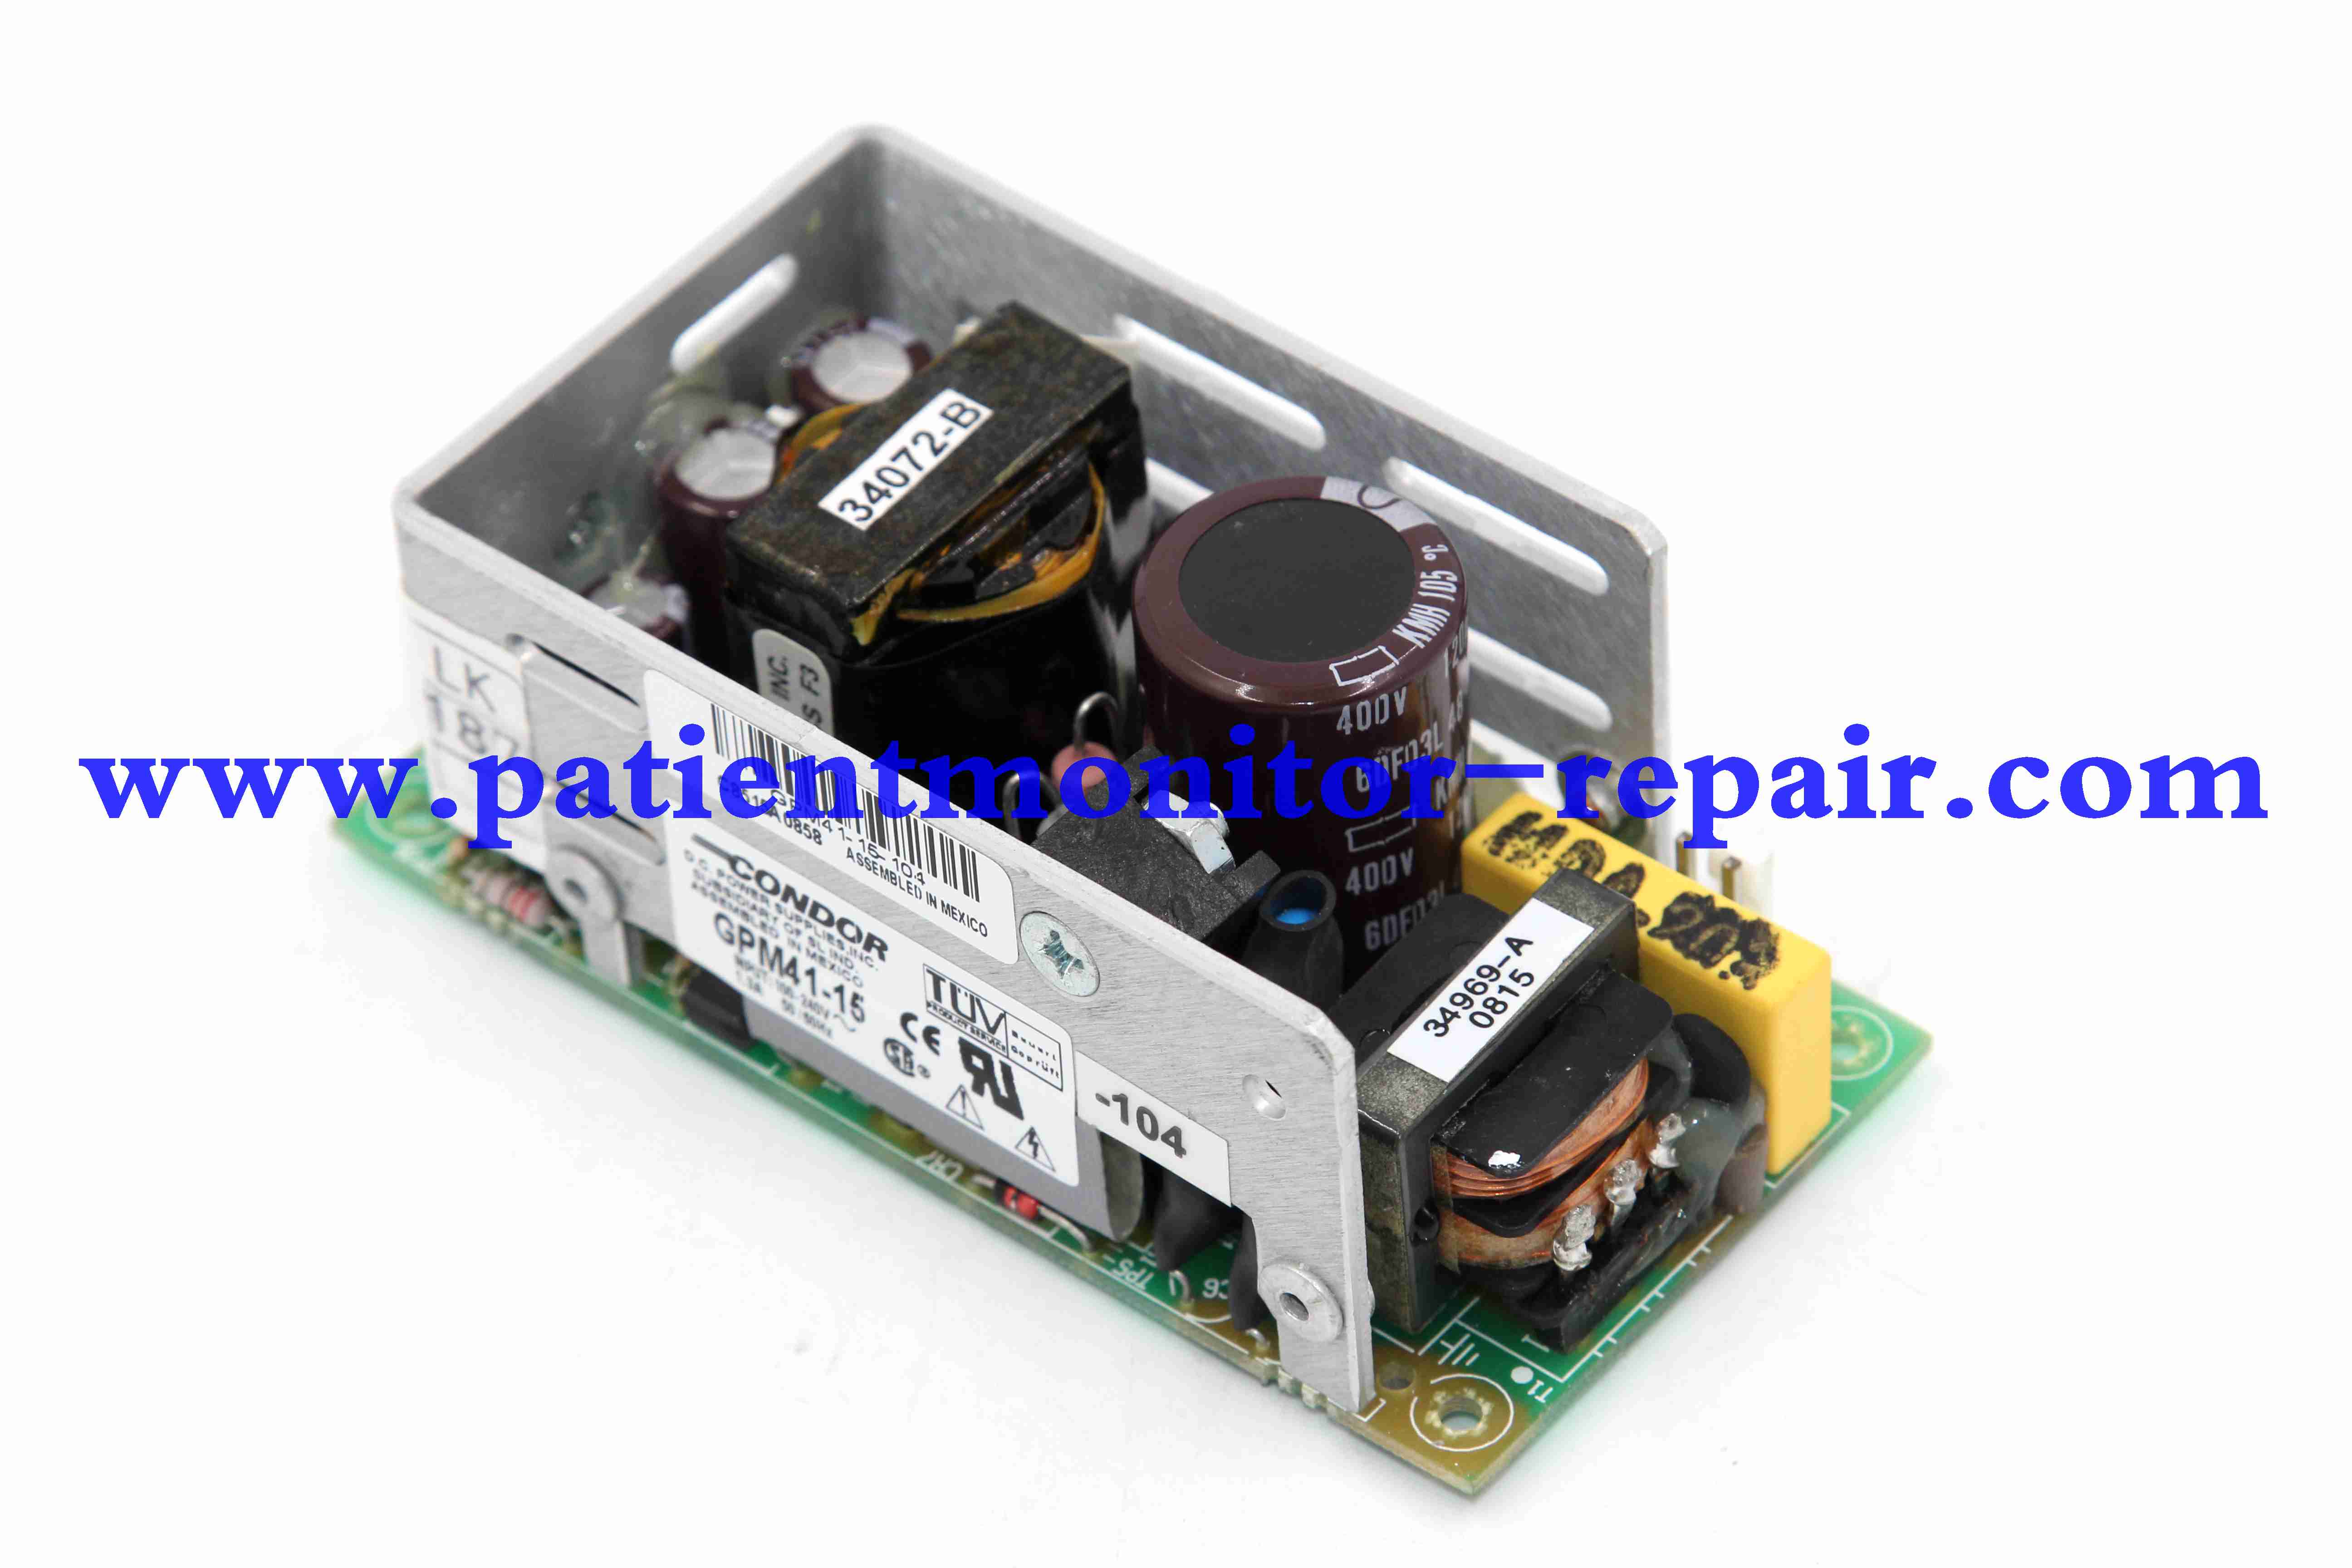  IntelliVue G5-M1019A power supply board 